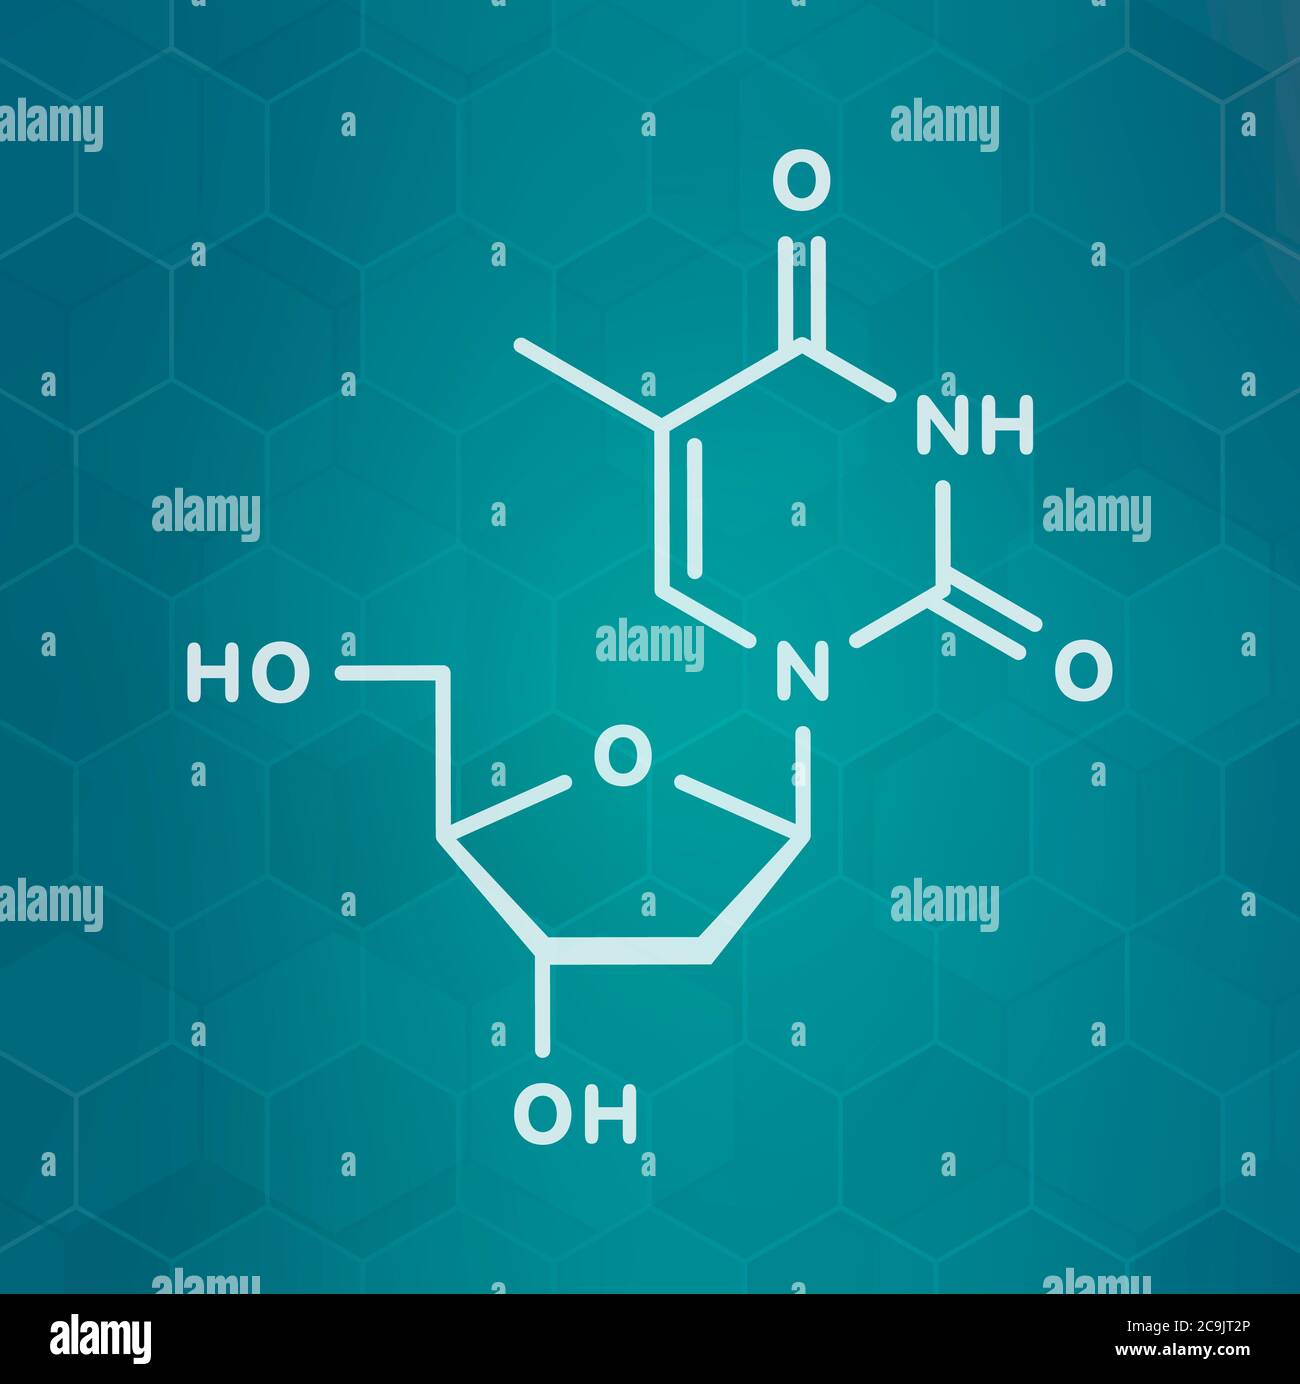 Thymidine (deoxythymidine) nucleoside molecule. DNA building block. White skeletal formula on dark teal gradient background with hexagonal pattern. Stock Photo